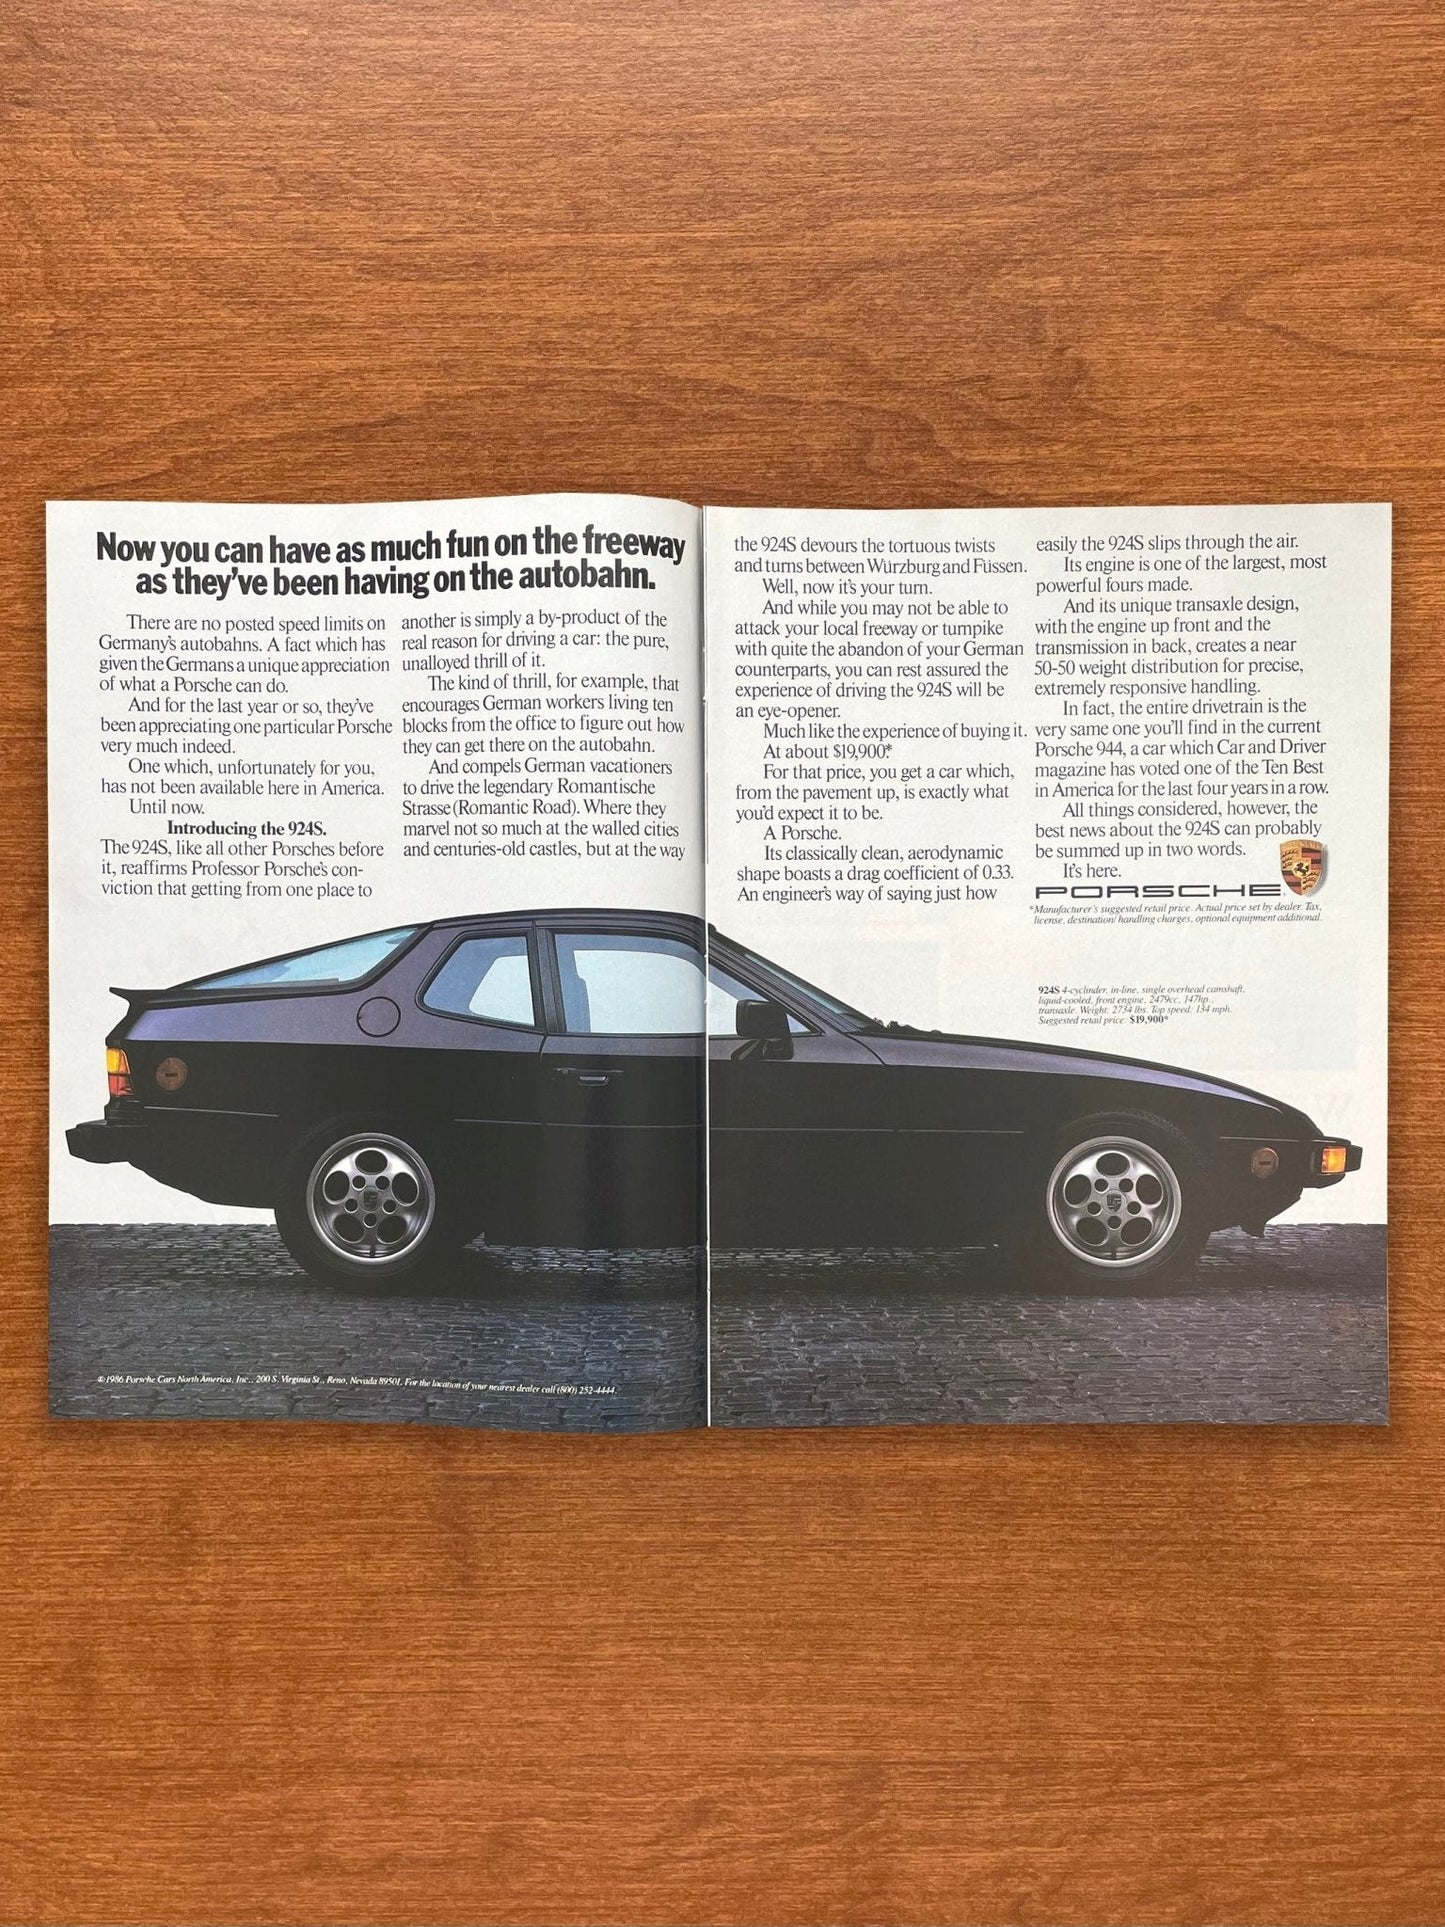 1986 Porsche 924S "as much fun on the freeway..." Advertisement